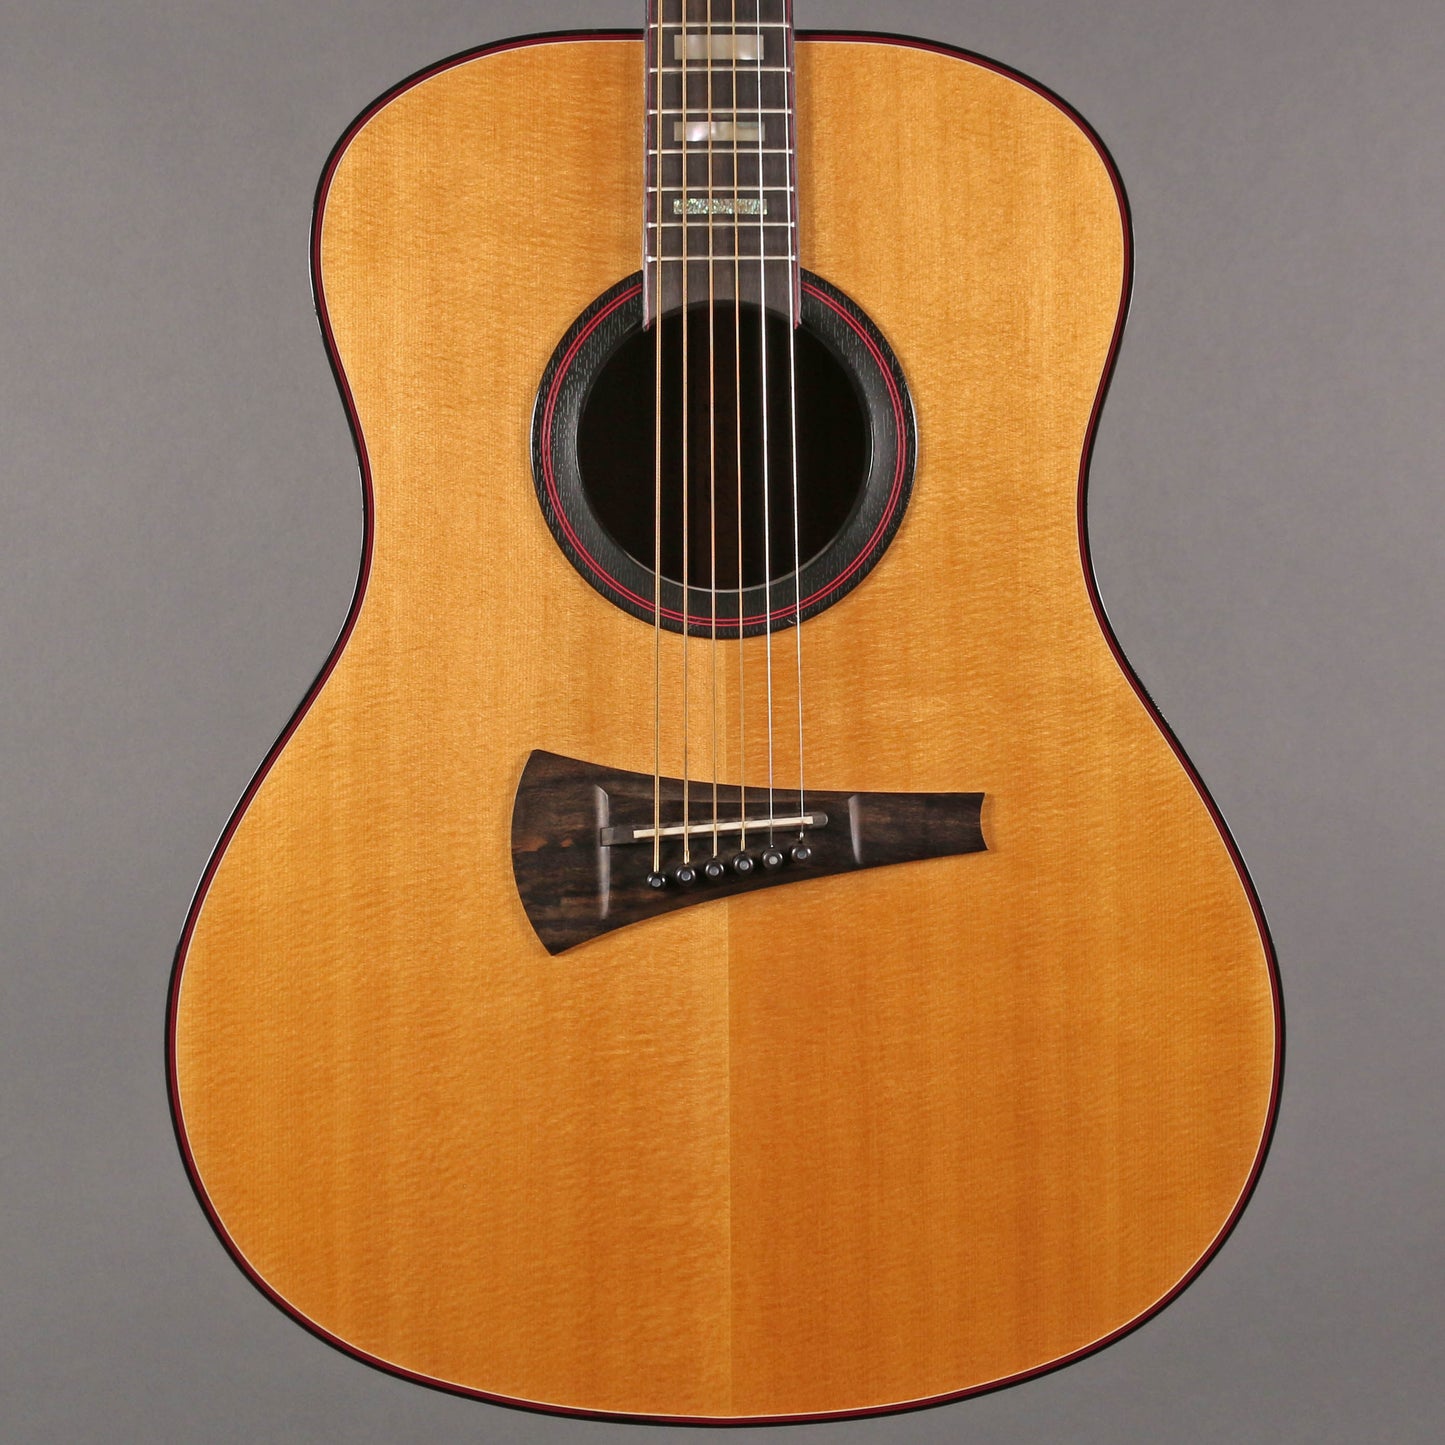 1976 Gibson MK-81 Acoustic [*Kalamazoo Collection]